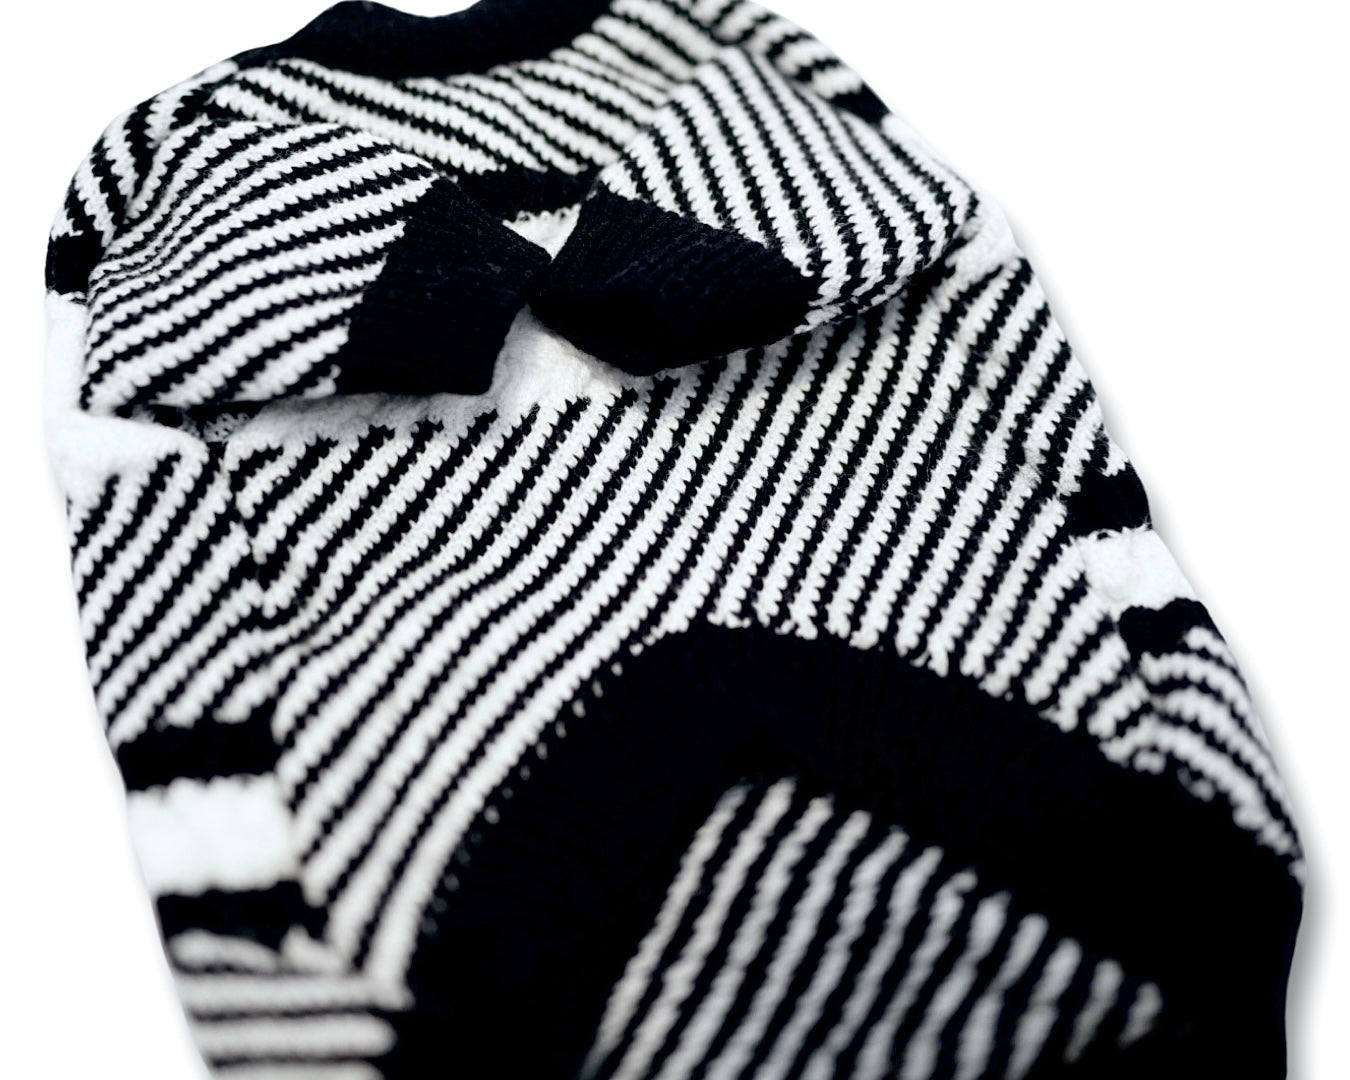 Chewnel knit sweater